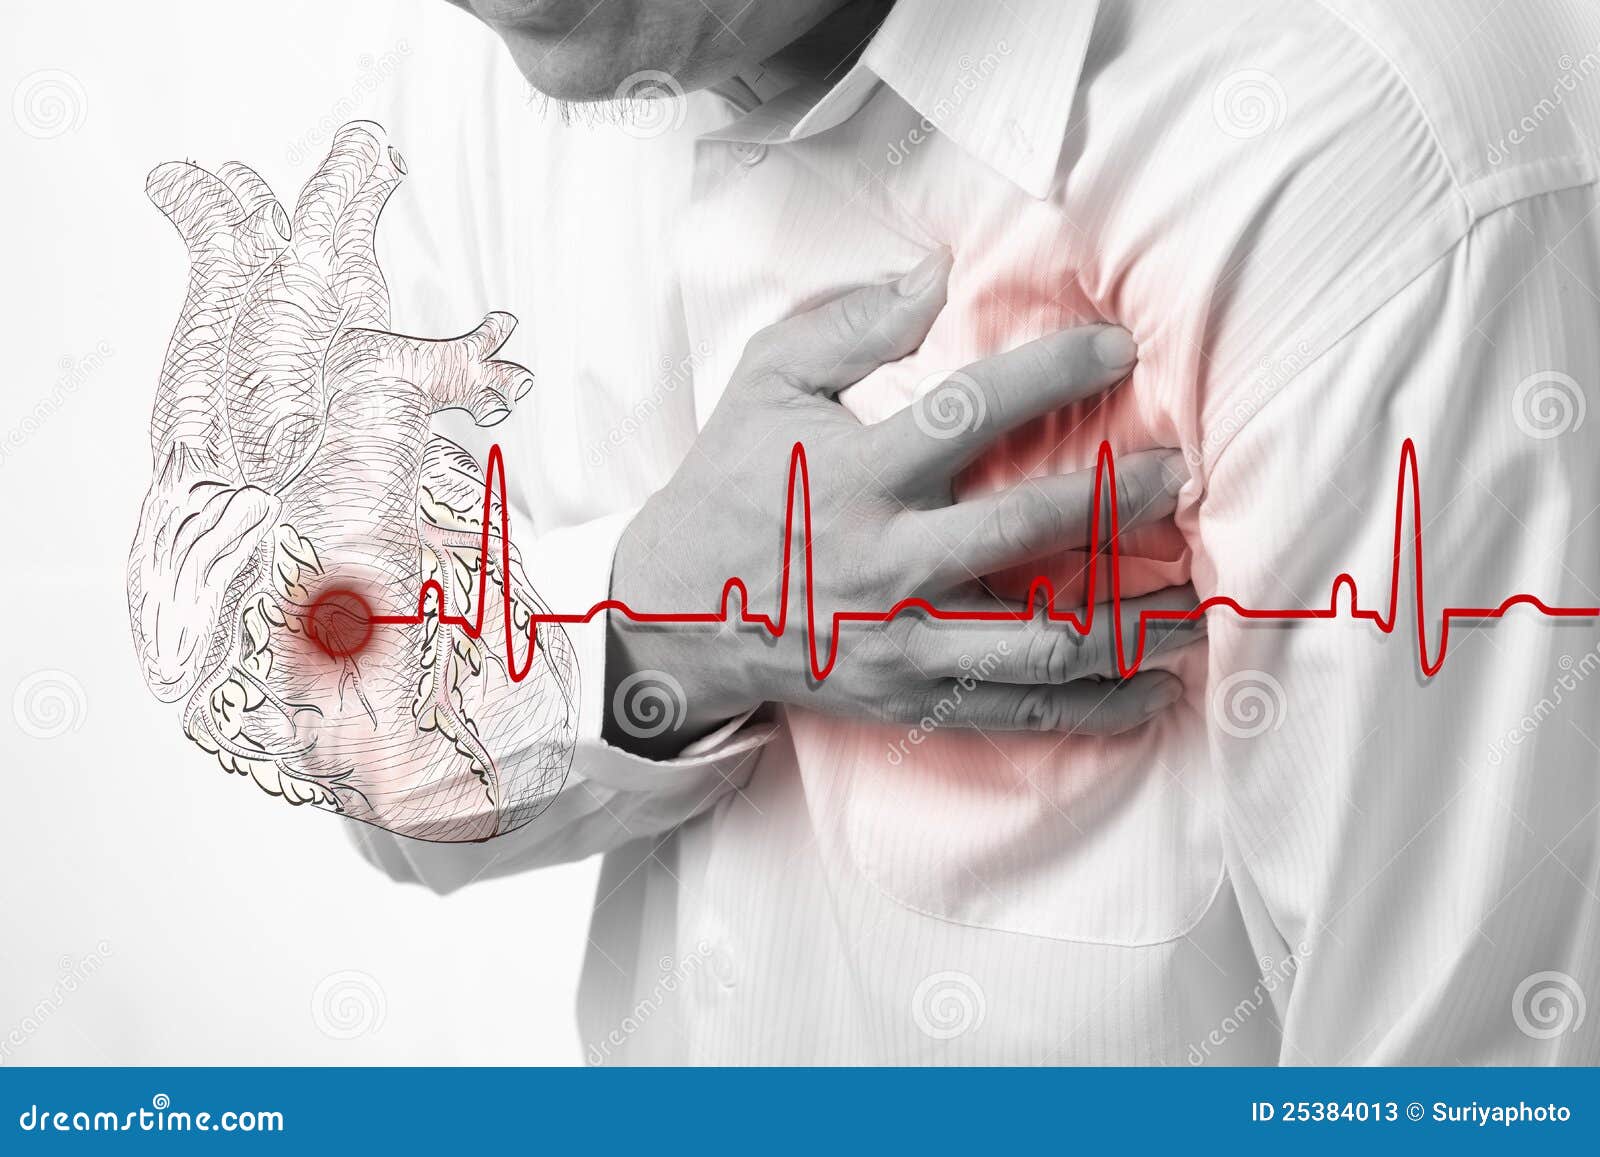 heart attack and heart beats cardiogram